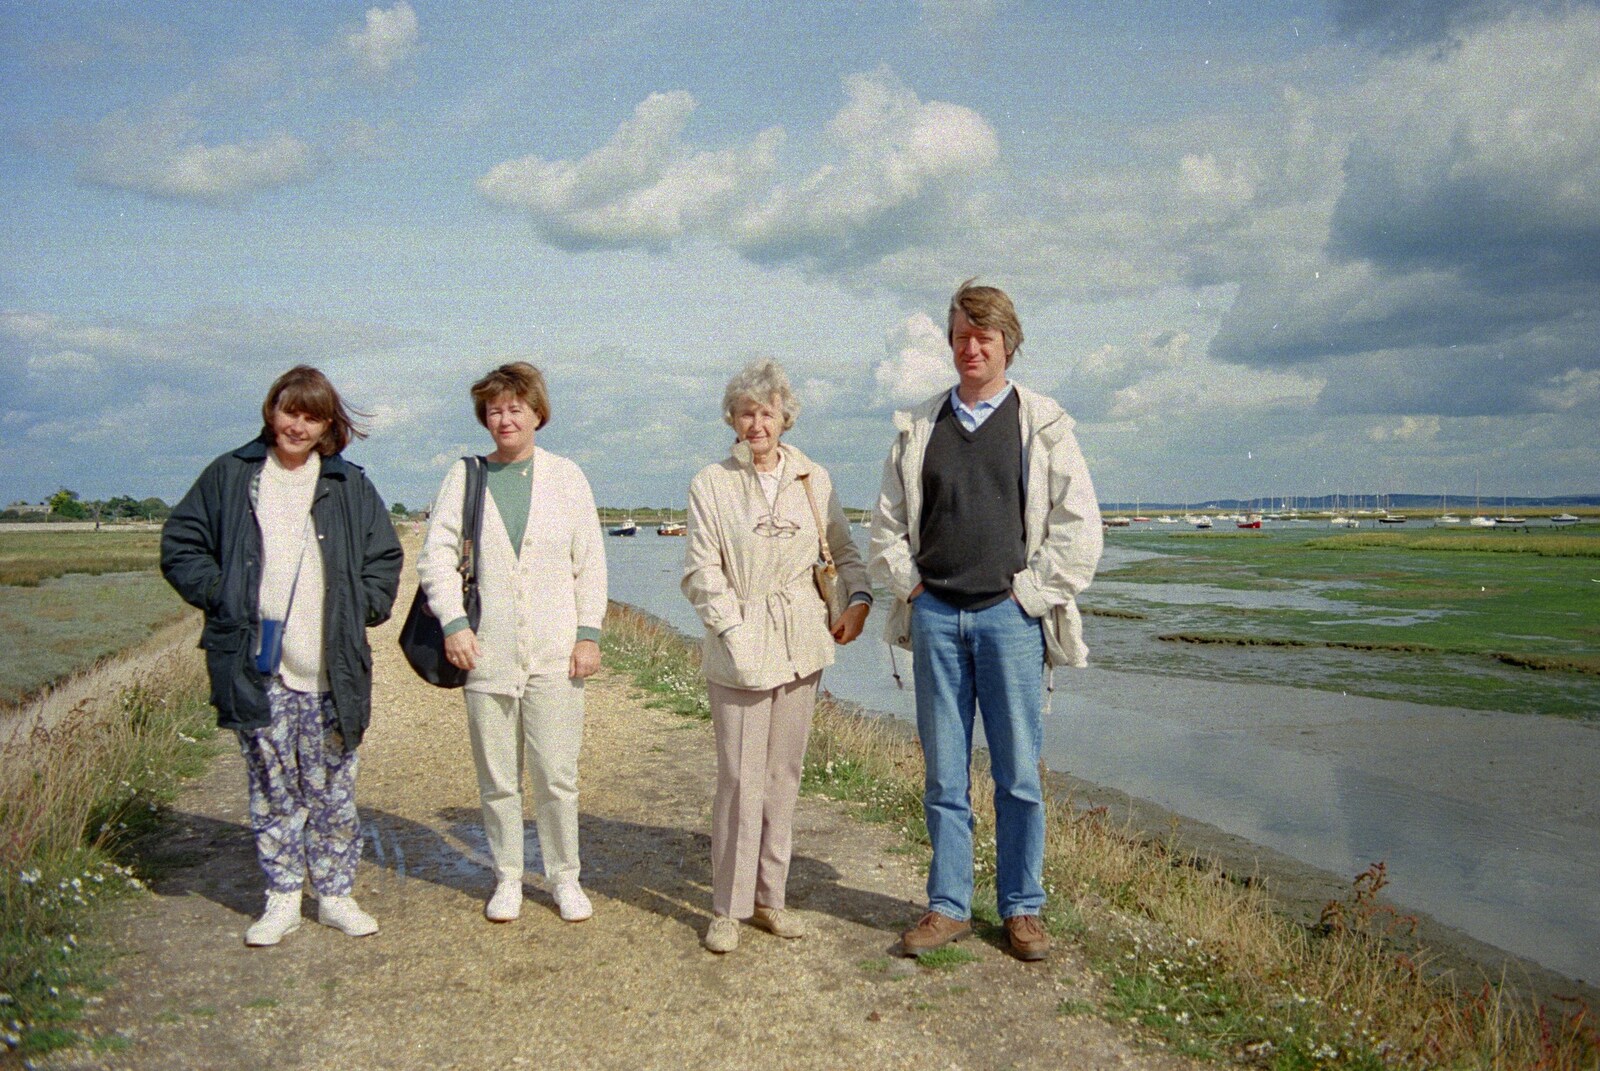 Grandmother's Seventieth Birthday, Brockenhurst and Keyhaven, Hampshire - 11th September 1994: Caroline, Judith, Grandmother and Neil